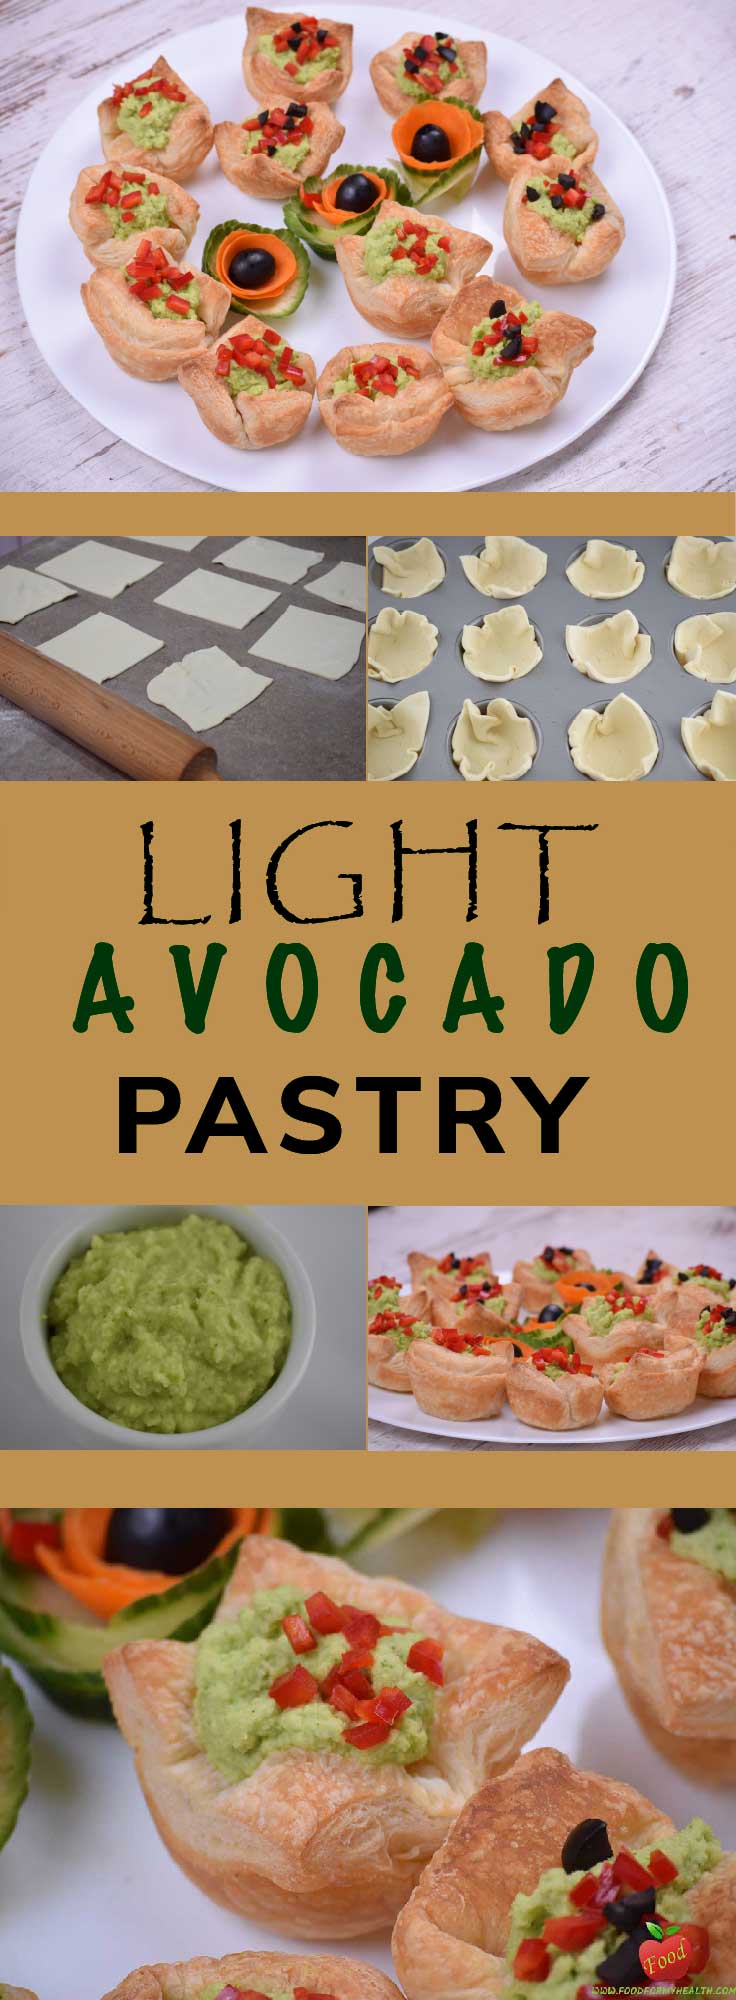 Light avocado pastry cups